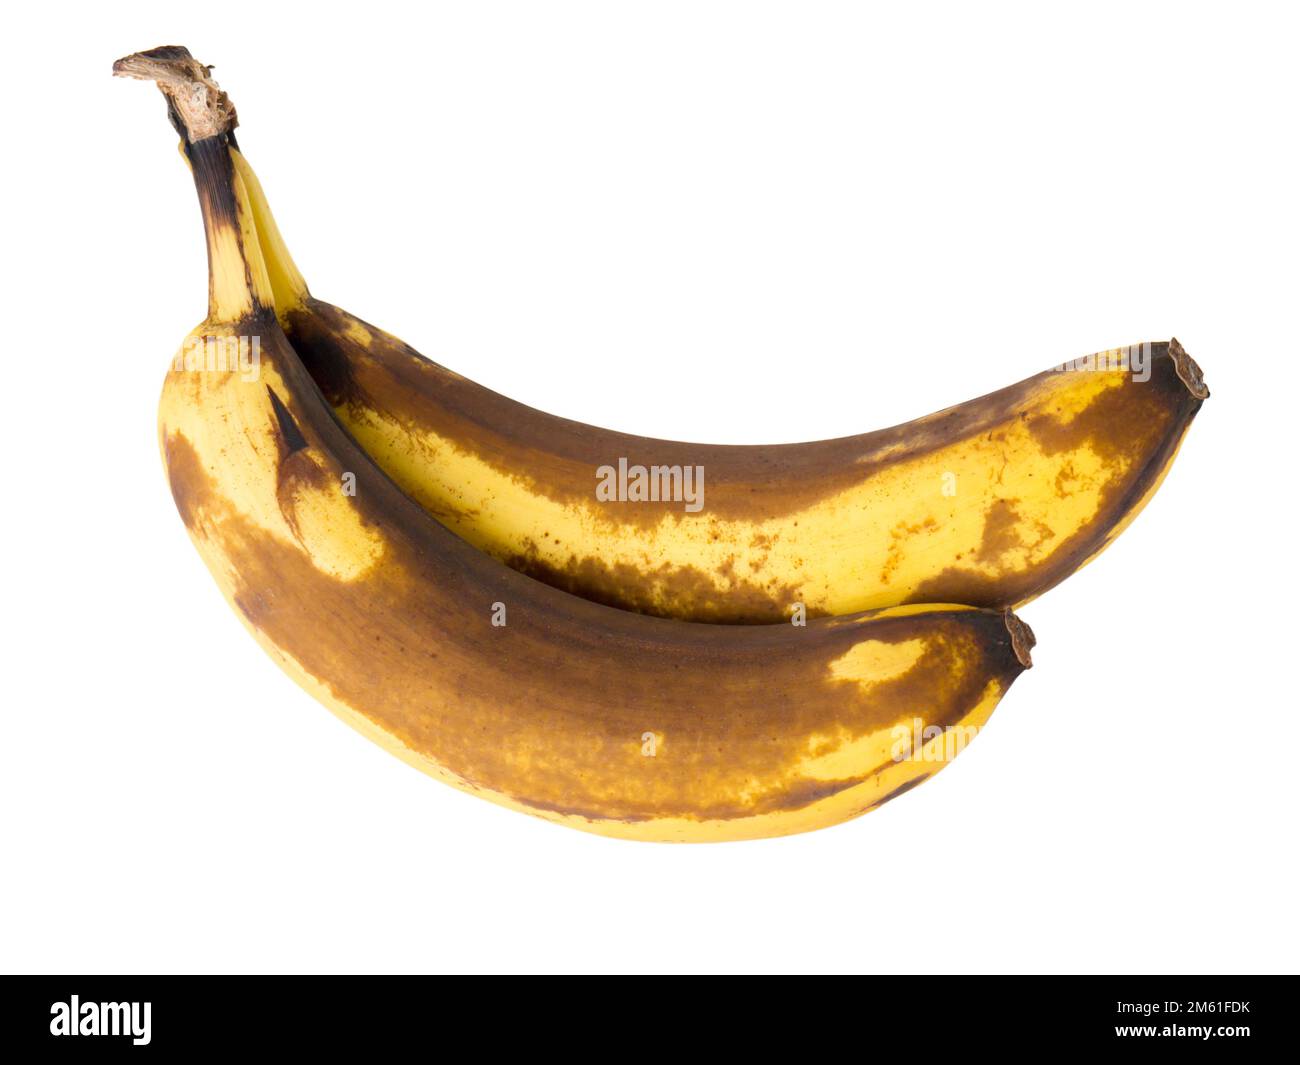 Overripe banana, peeled and eaten. Stock Photo